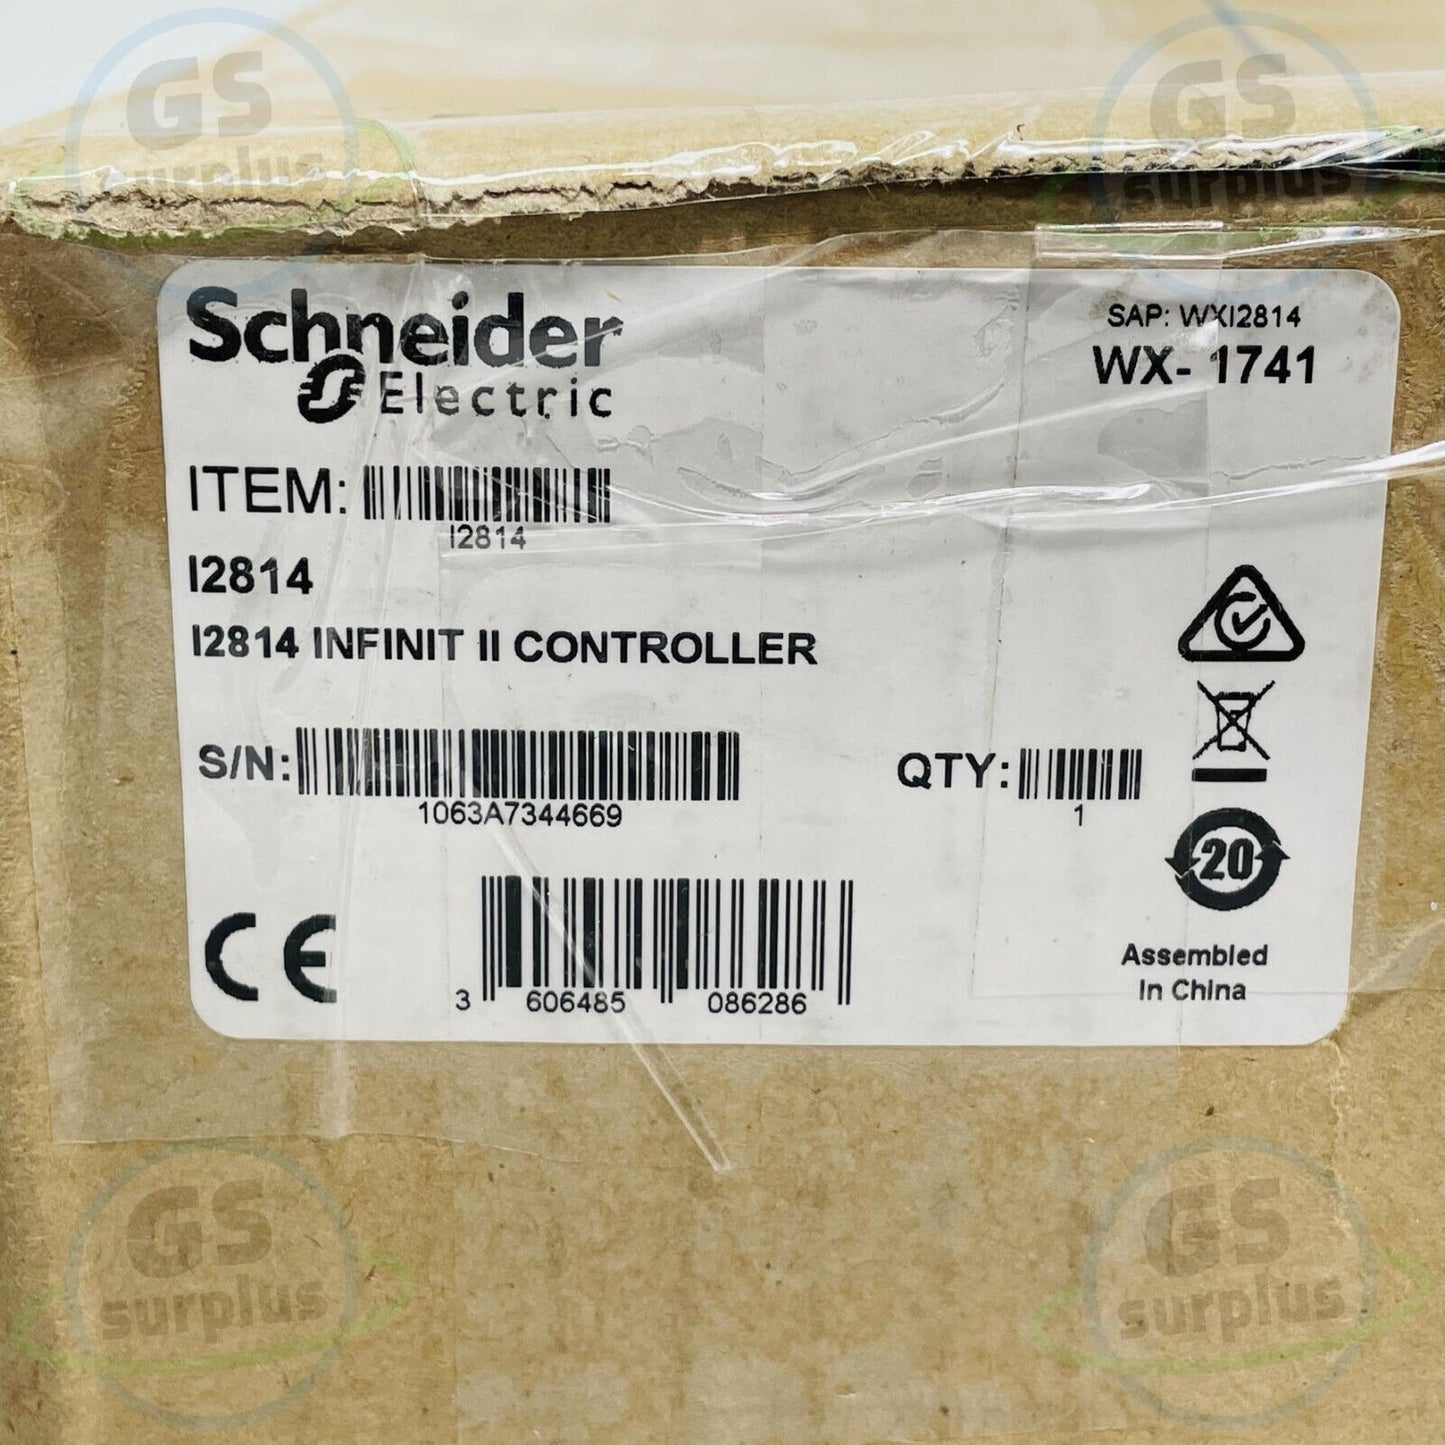 New Schneider Electric i2814 Continuum Infinit II Controller